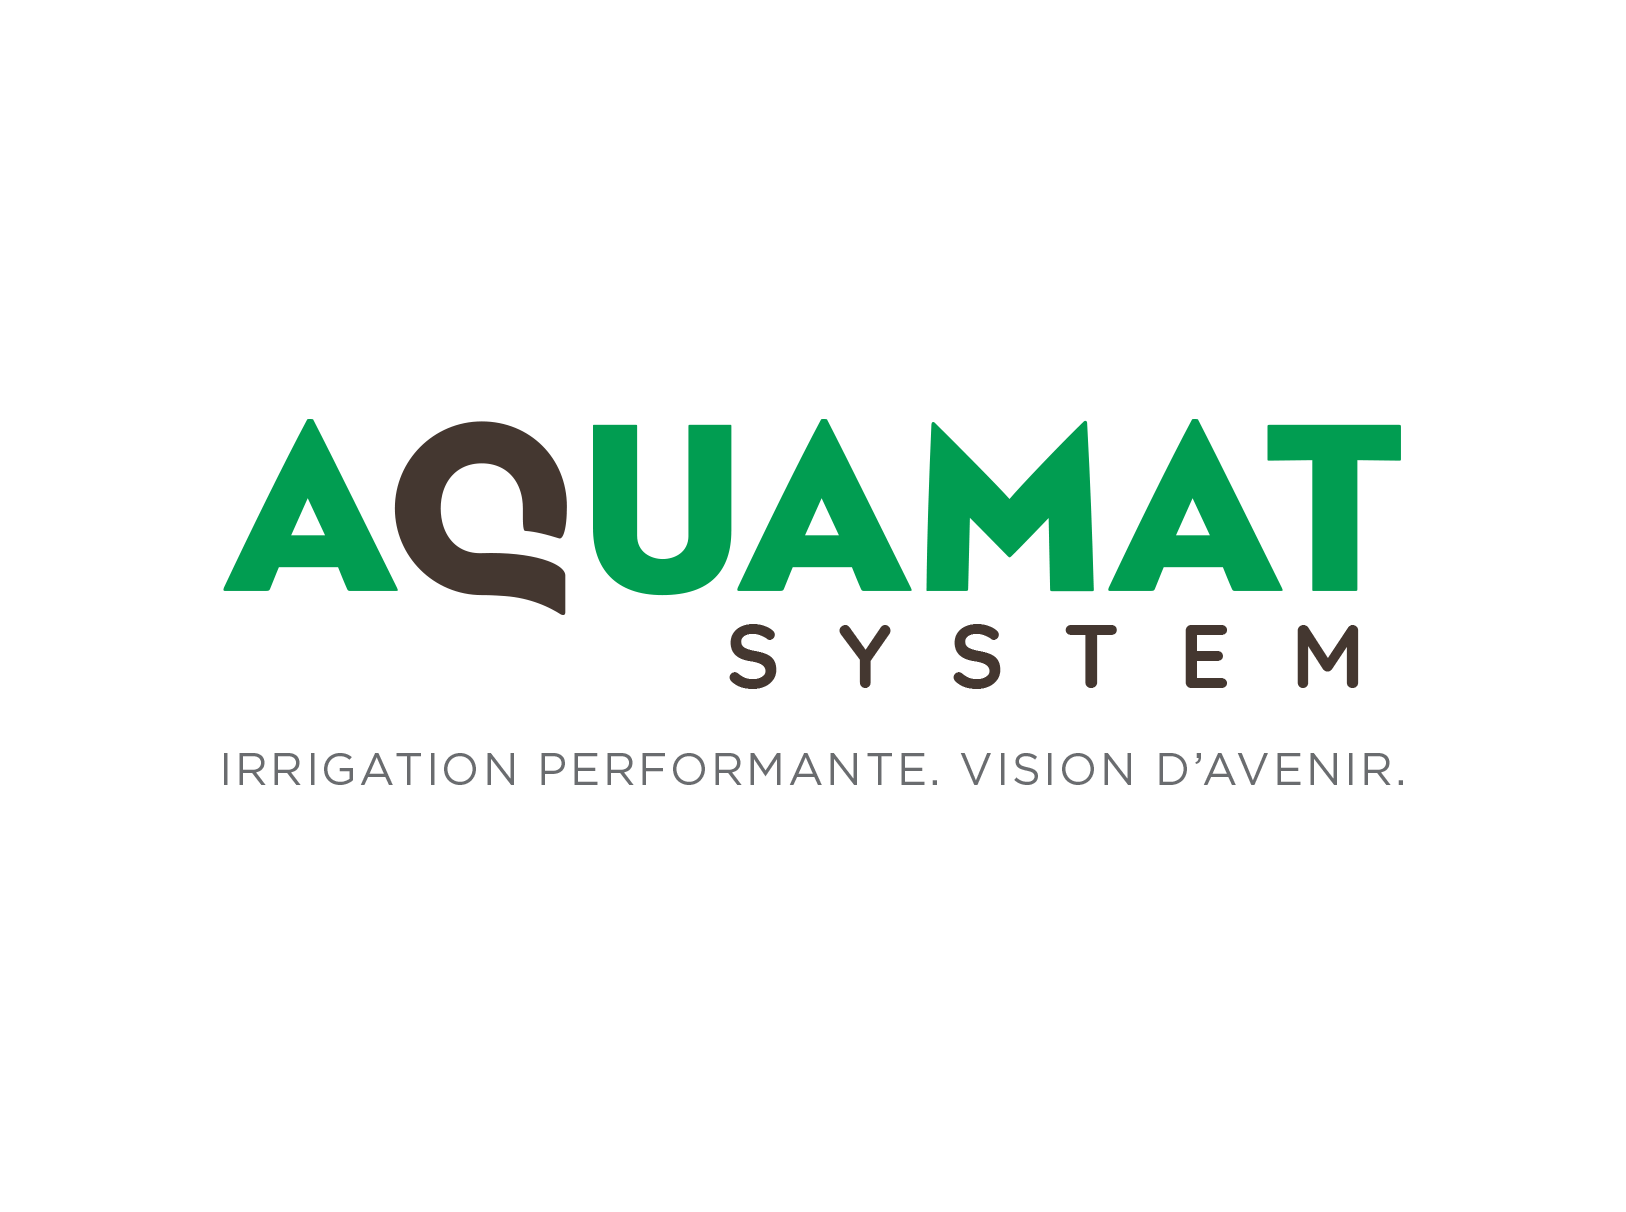 Aquamatsystem - irrigation performante. Vision d'avenir